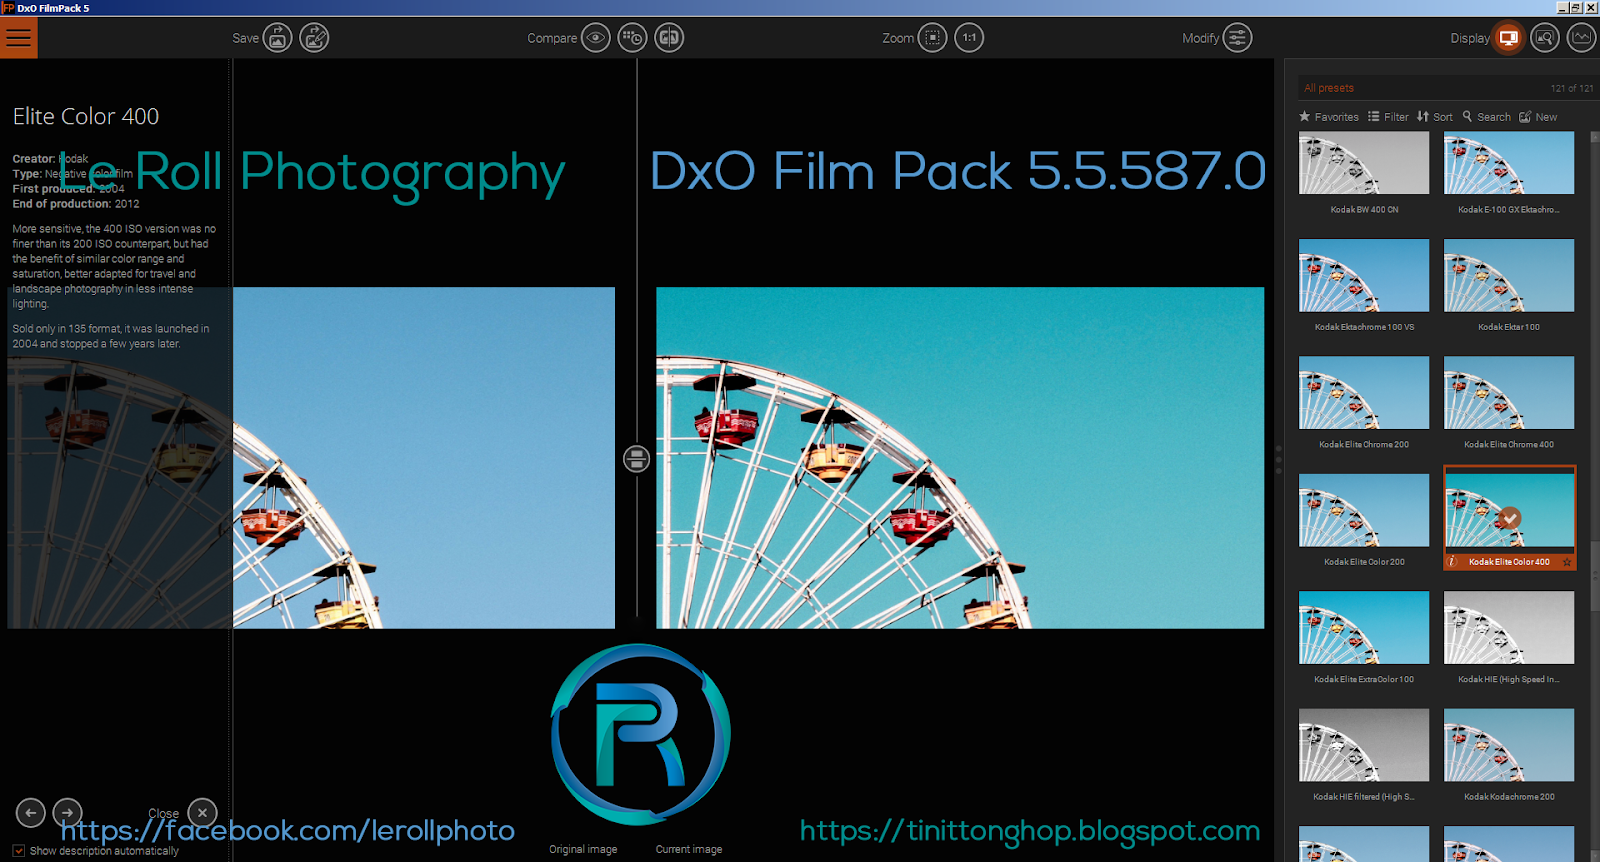 dxo filmpack 5 download